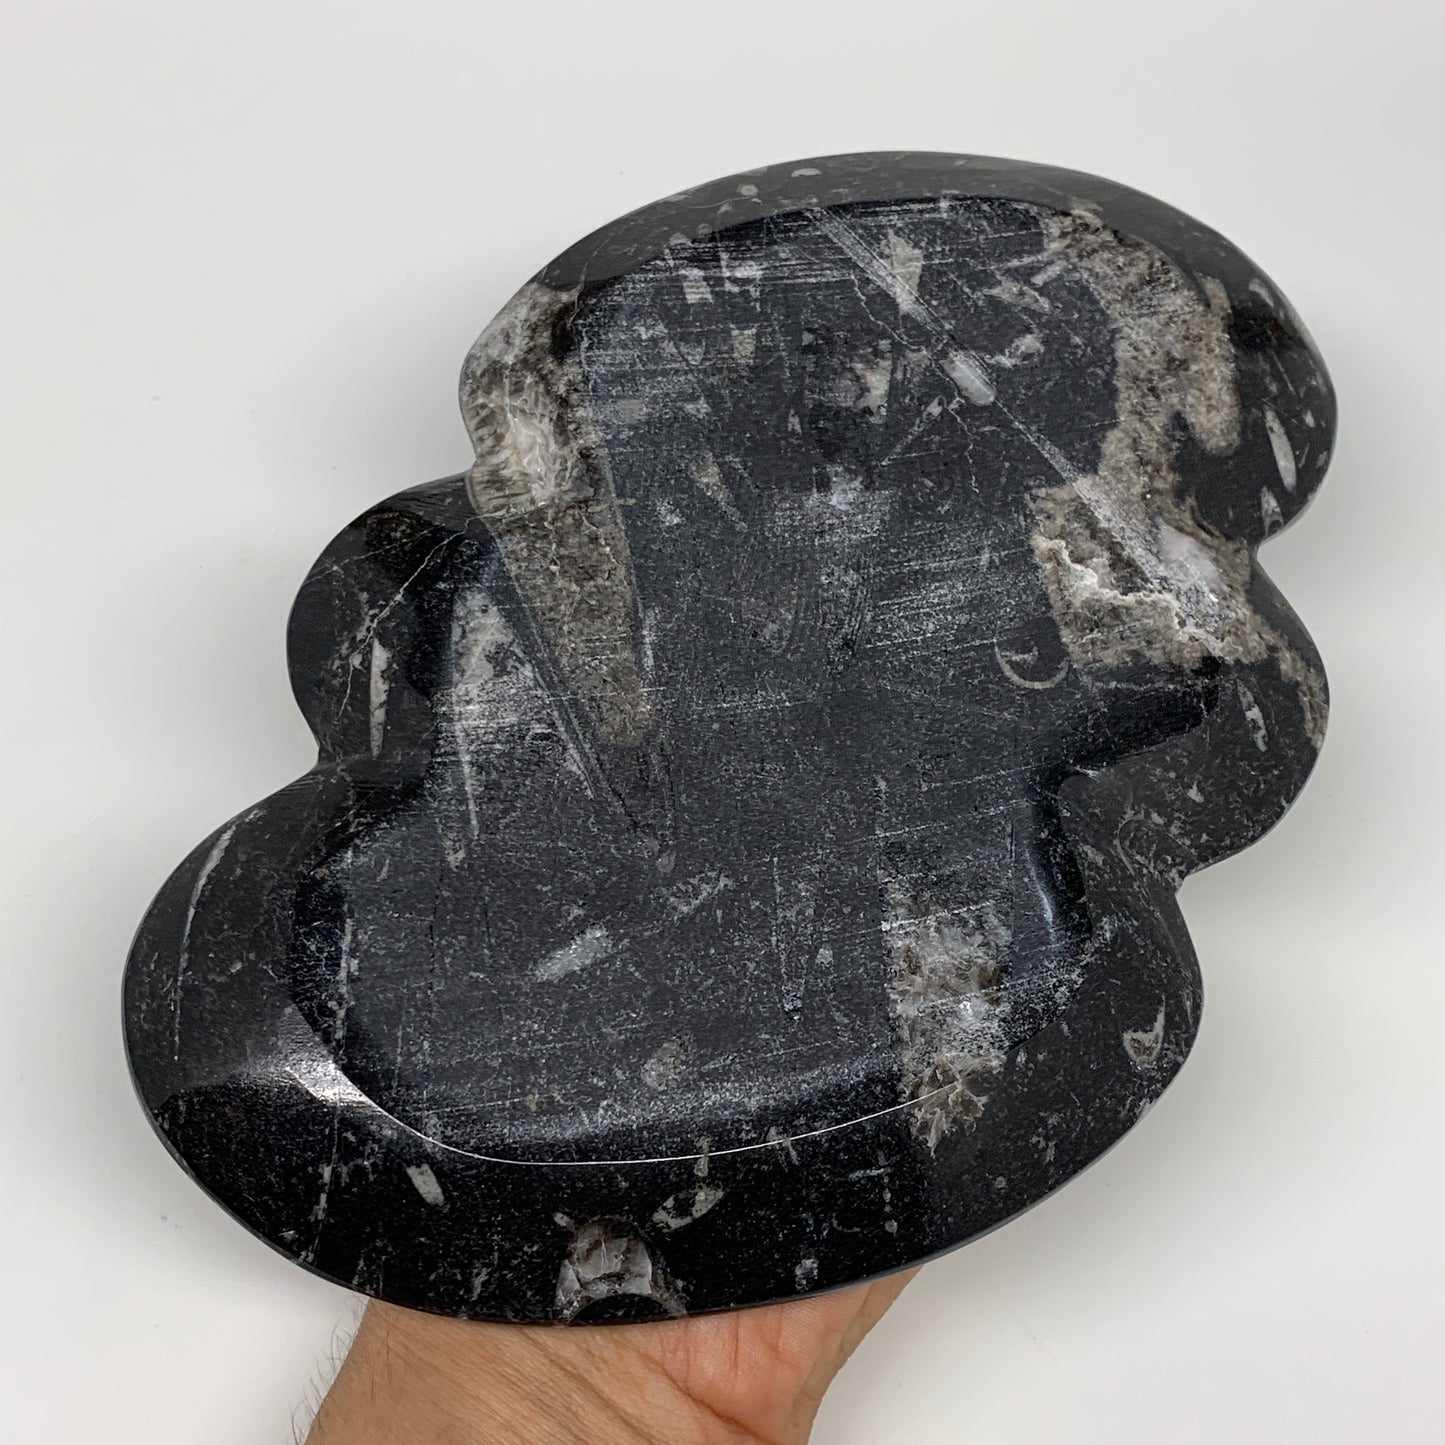 2pcs Set,8.5"x5.5" Double Heart Fossils Orthoceras Ammonite Bowls @Morocco,B8518